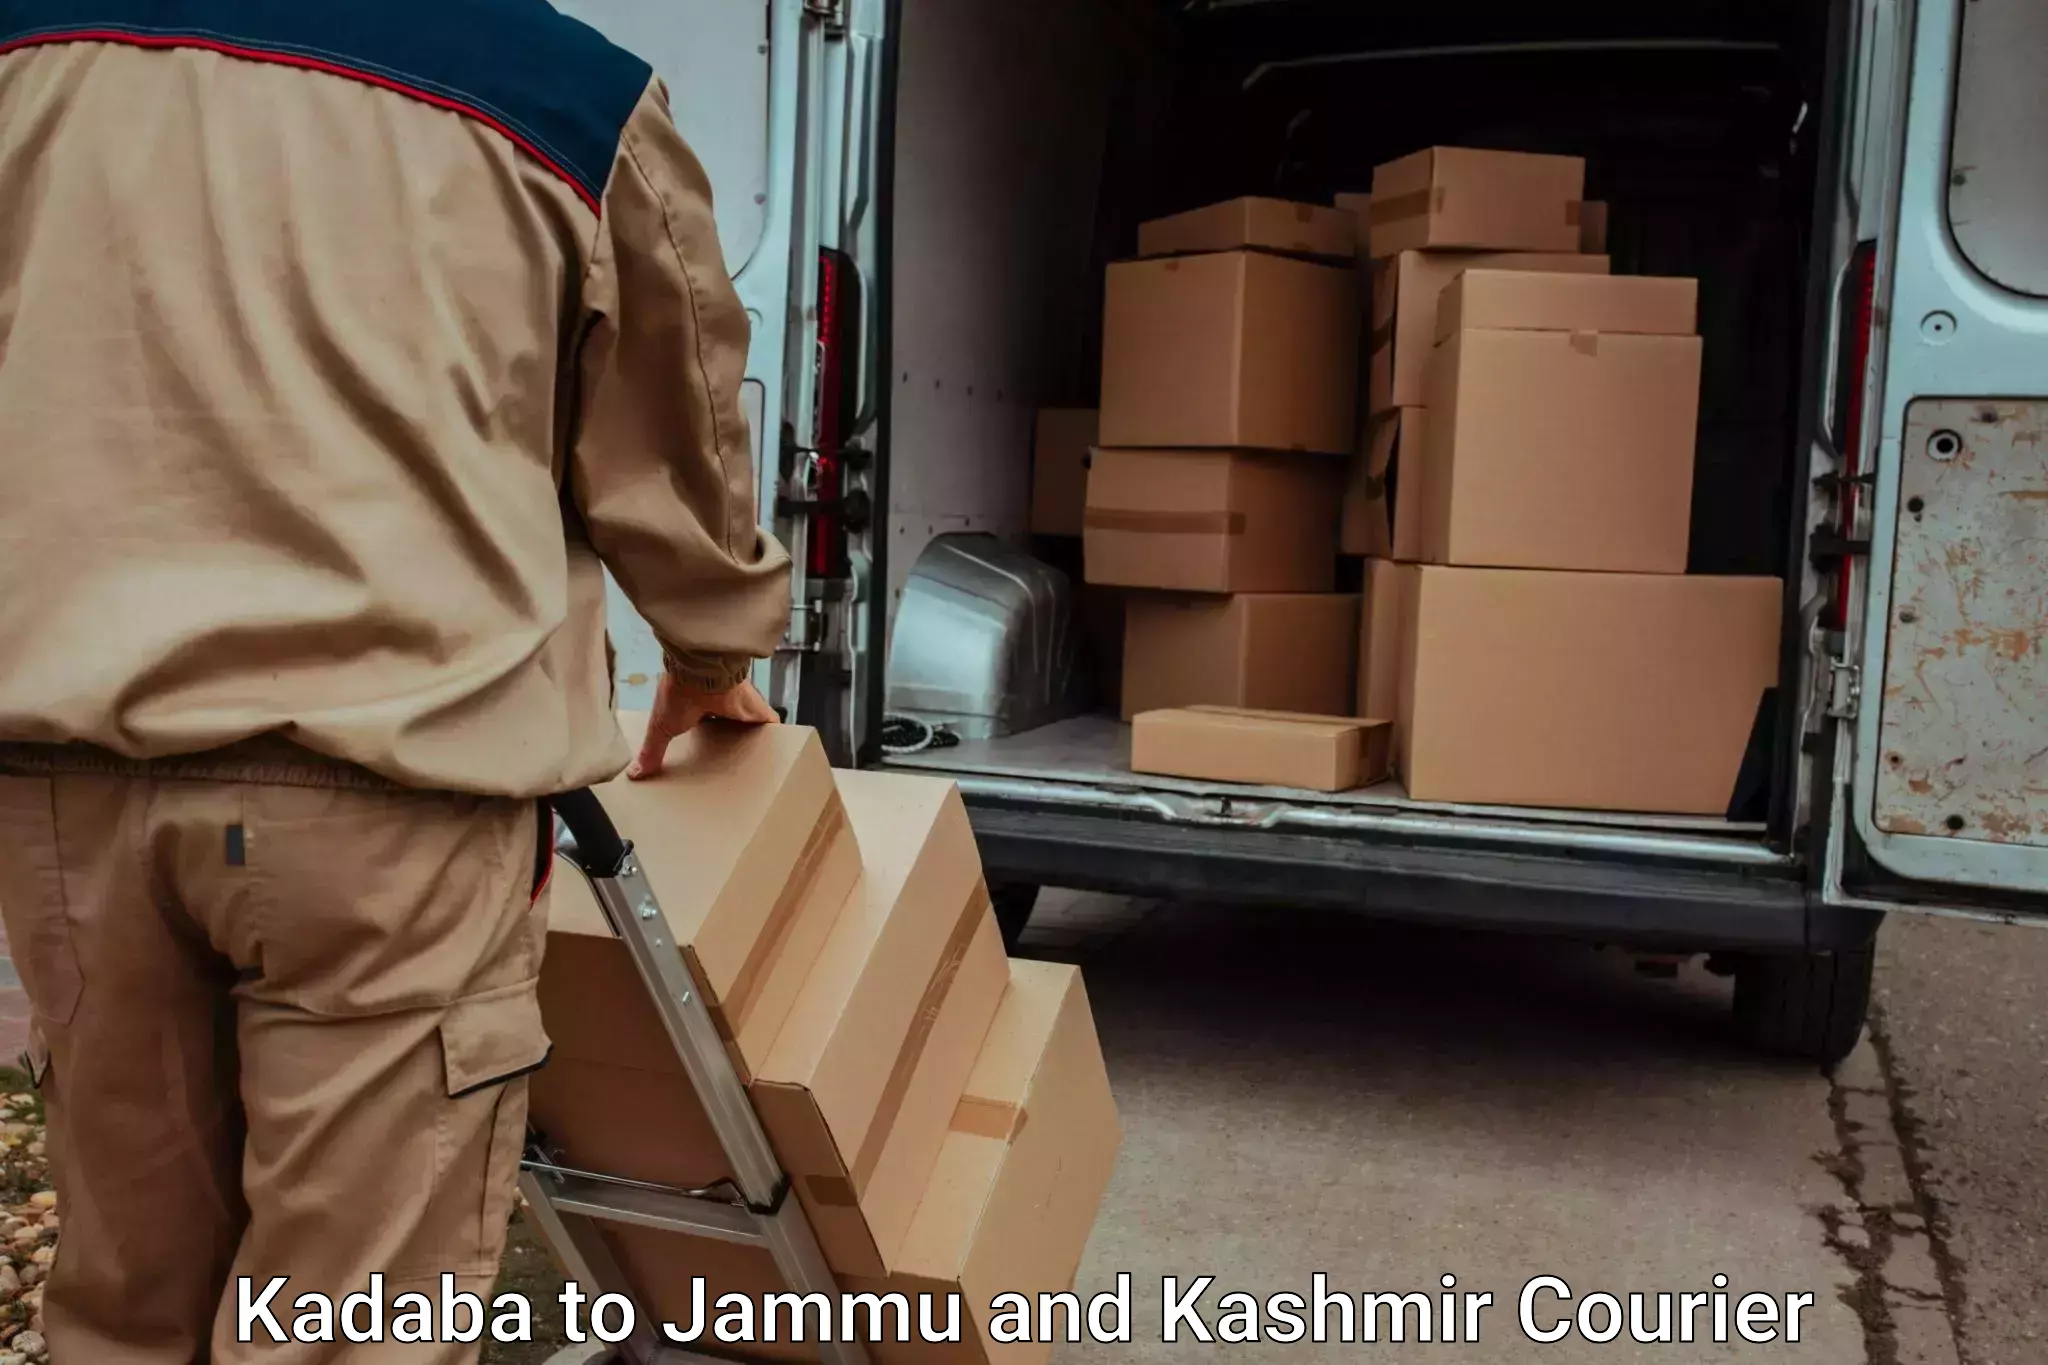 Trusted moving company Kadaba to Kishtwar